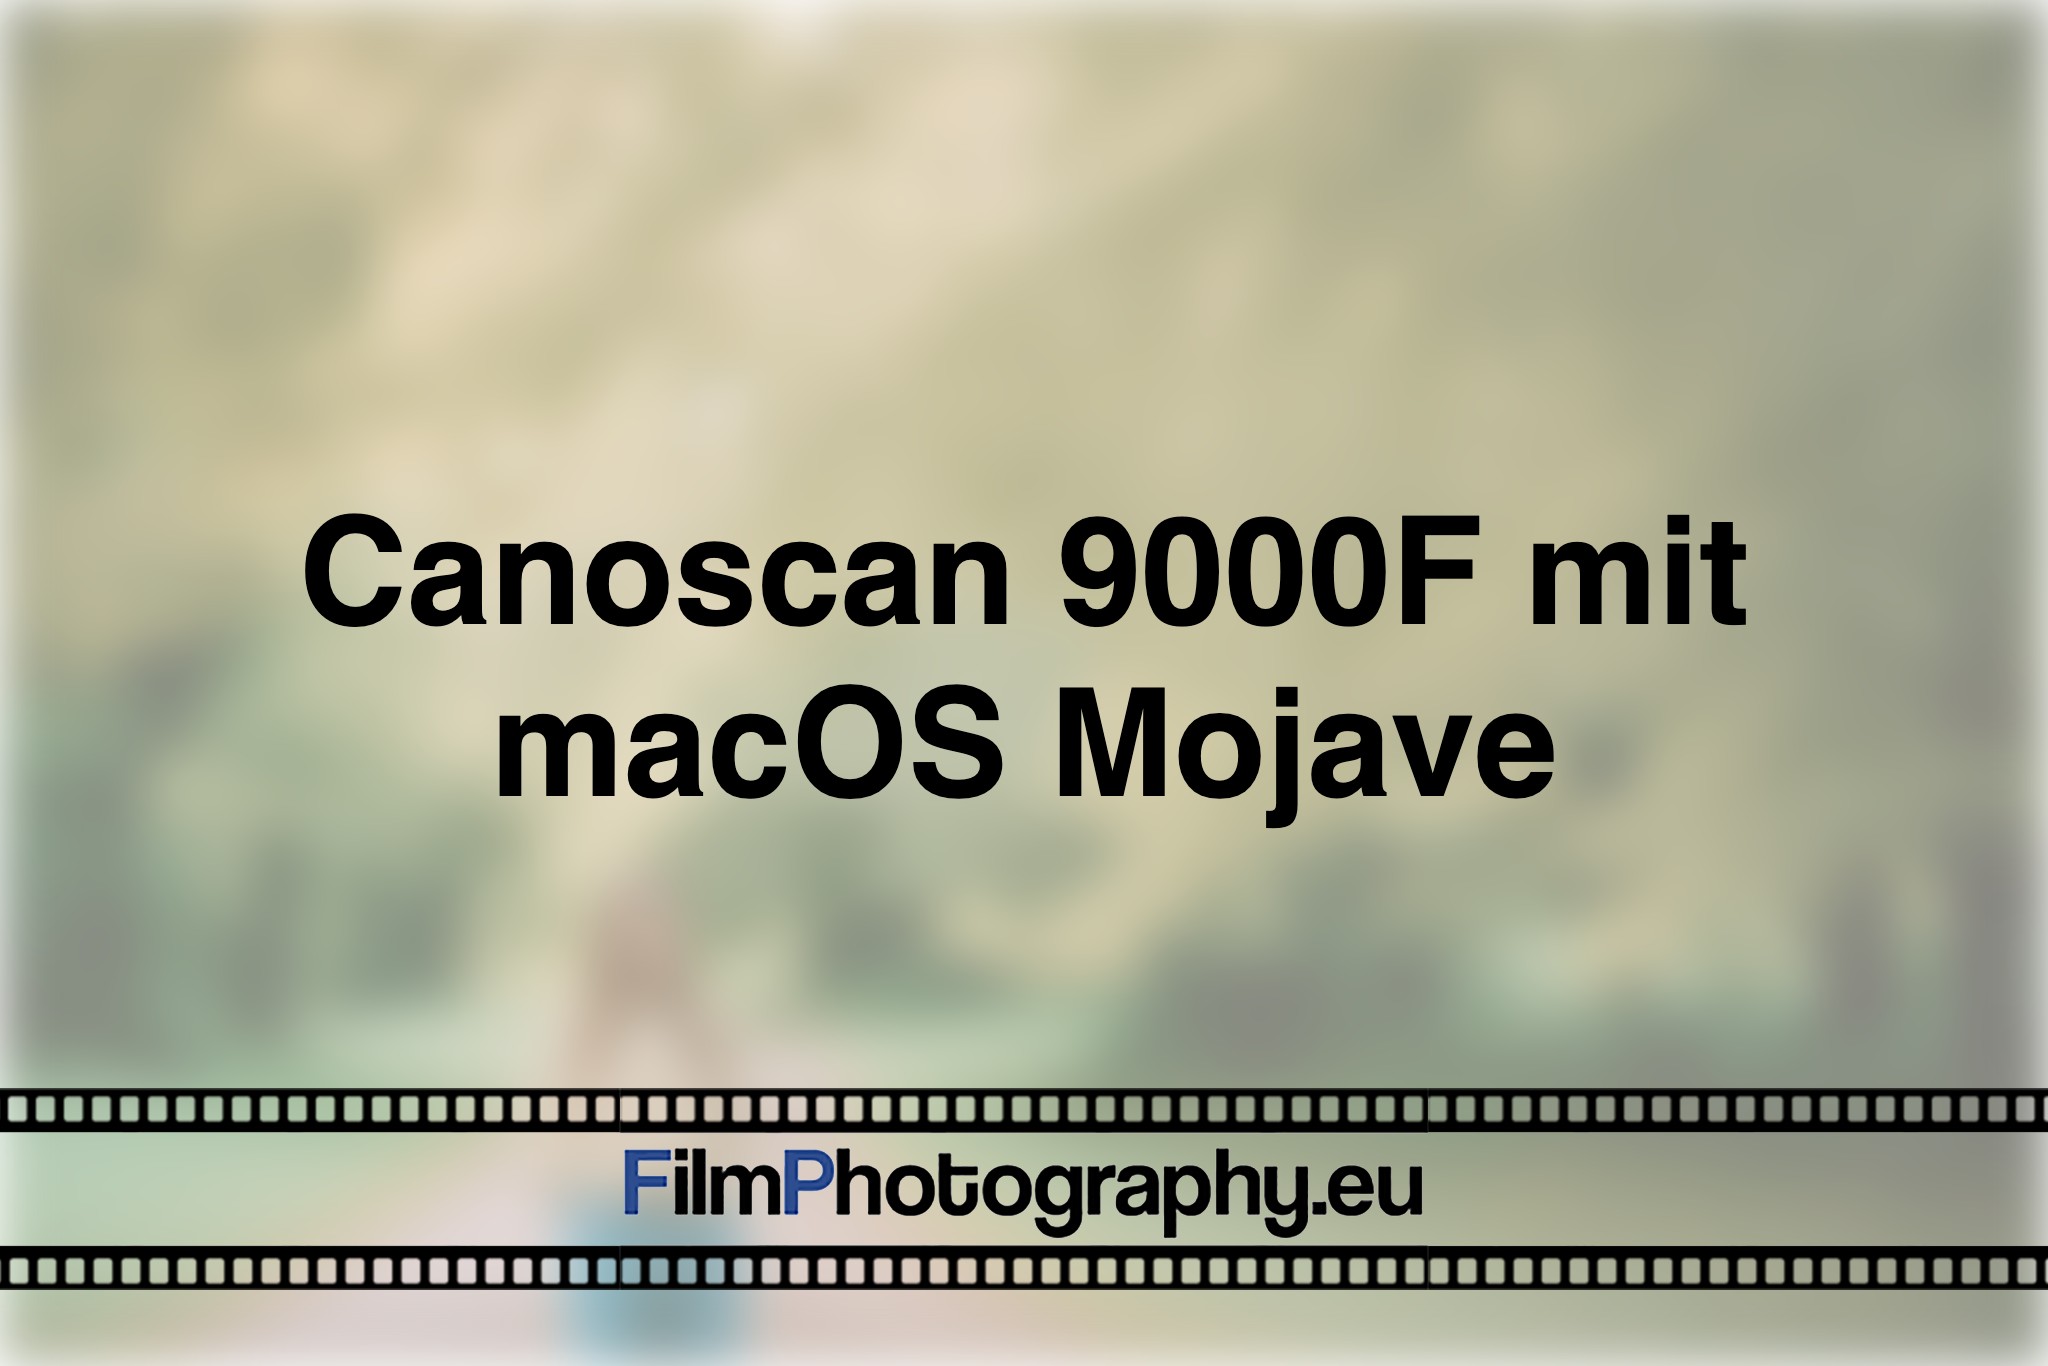 canoscan-9000f-mit-macos-mojave-photo-bnv